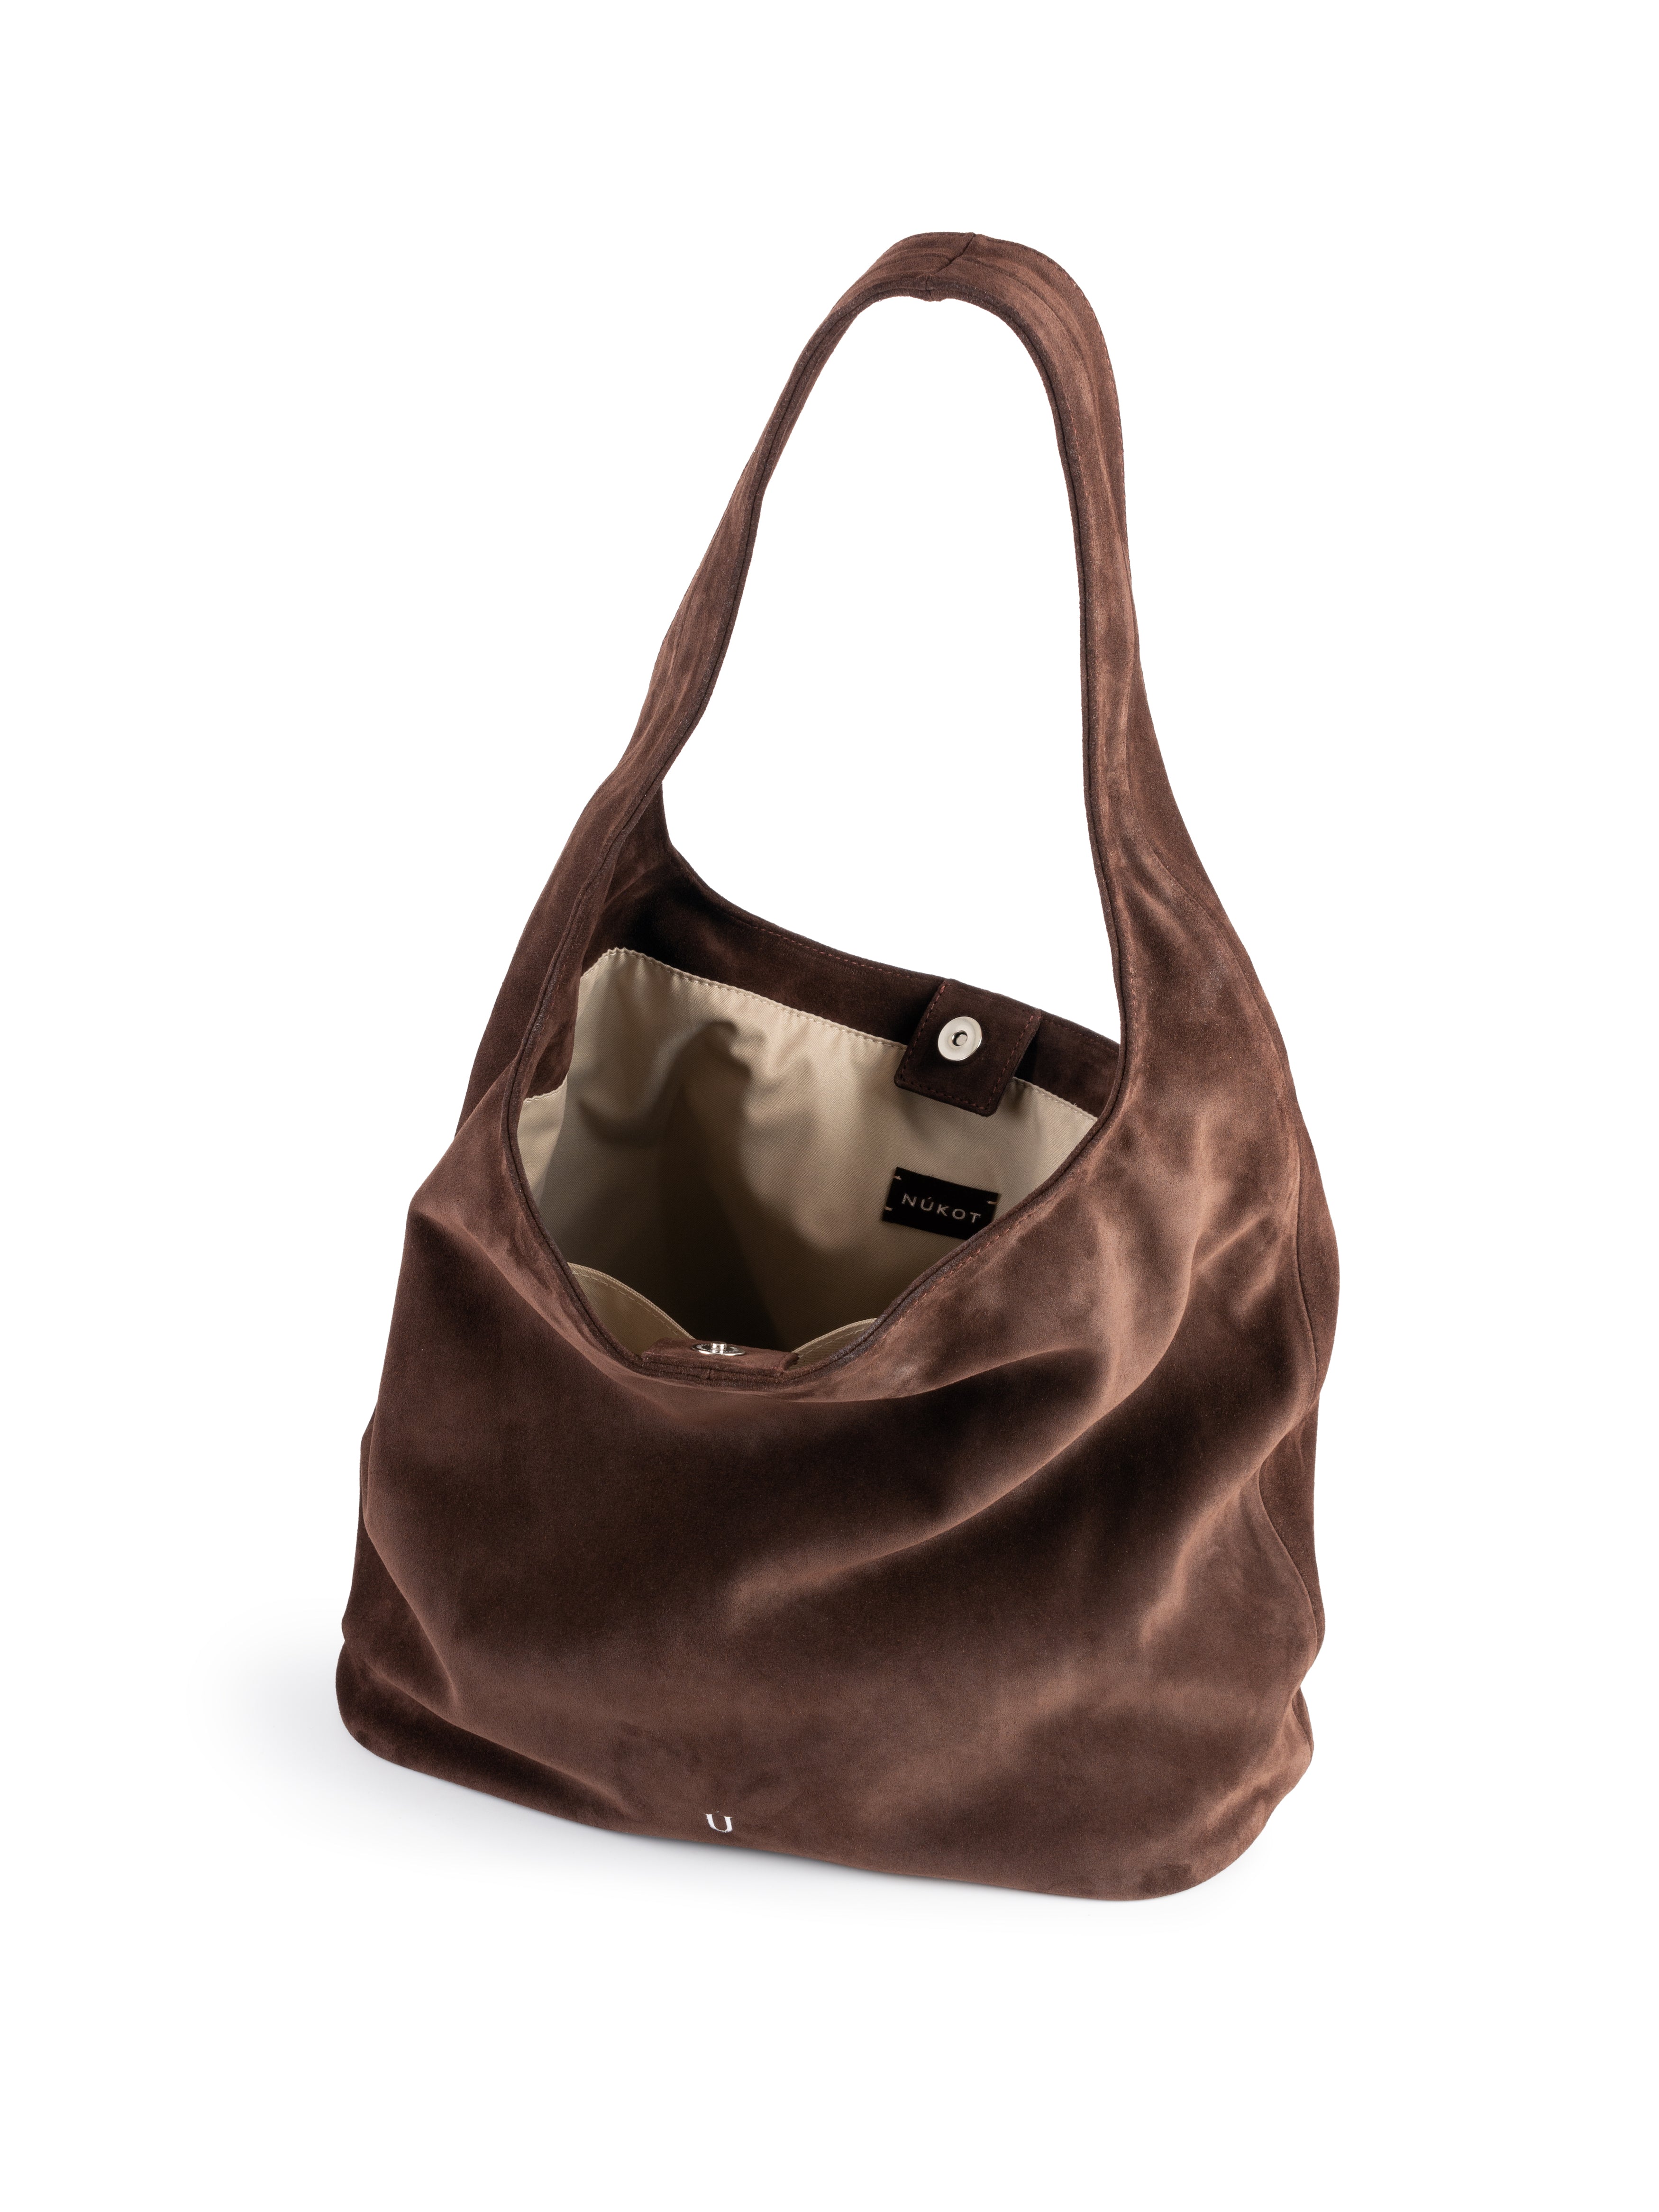 BOTTEGA VENETA Red Intrecciato Woven Nappa Leather Hobo Bag - 100%  authentic | eBay